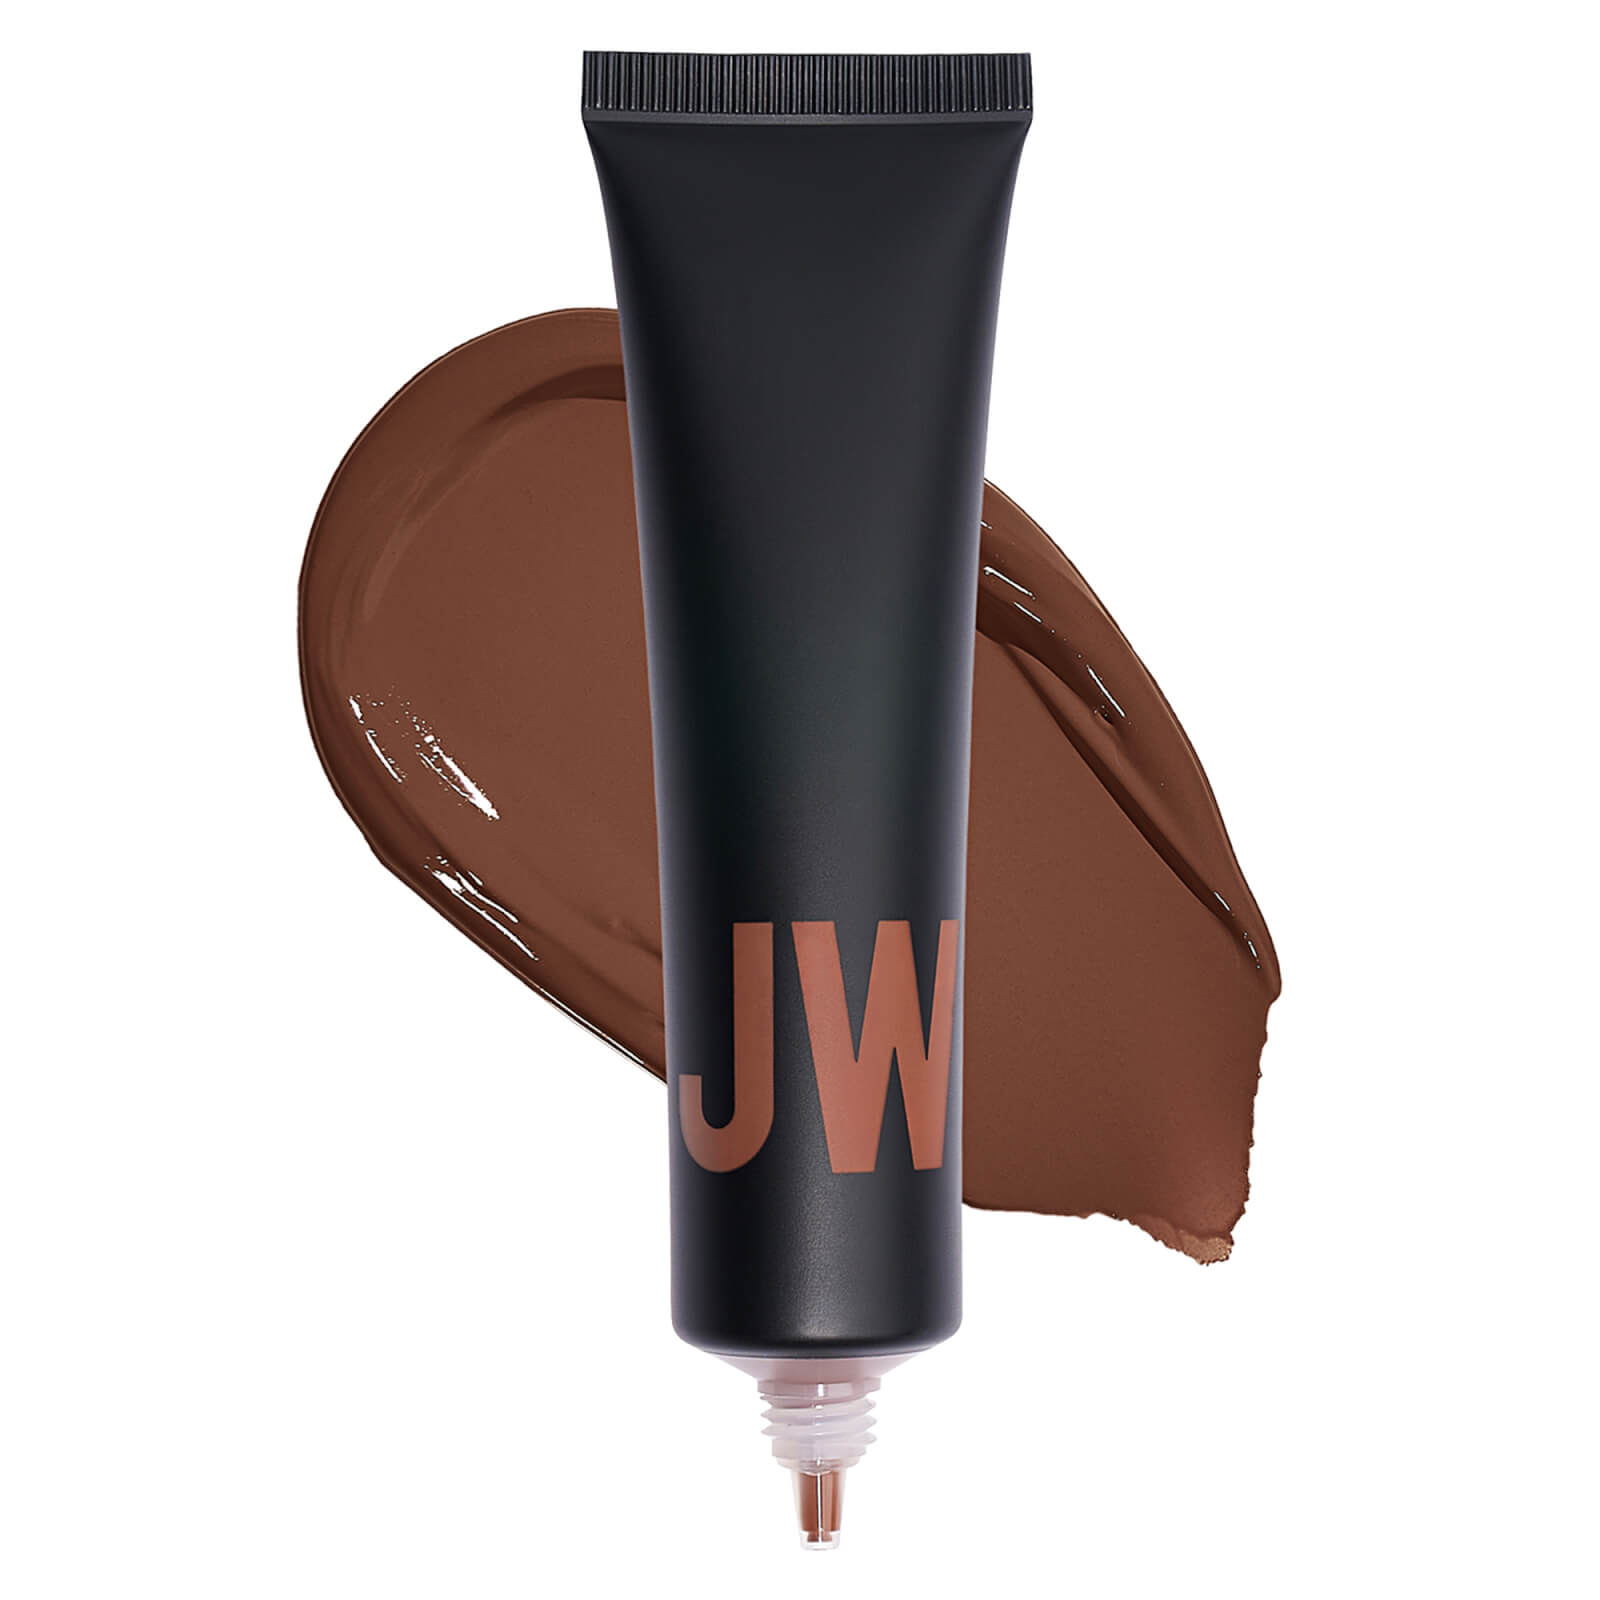 Jason Wu Beauty Tinted Moisturizer Meets Cc Cream 30ml (various Shades) - Skin 11